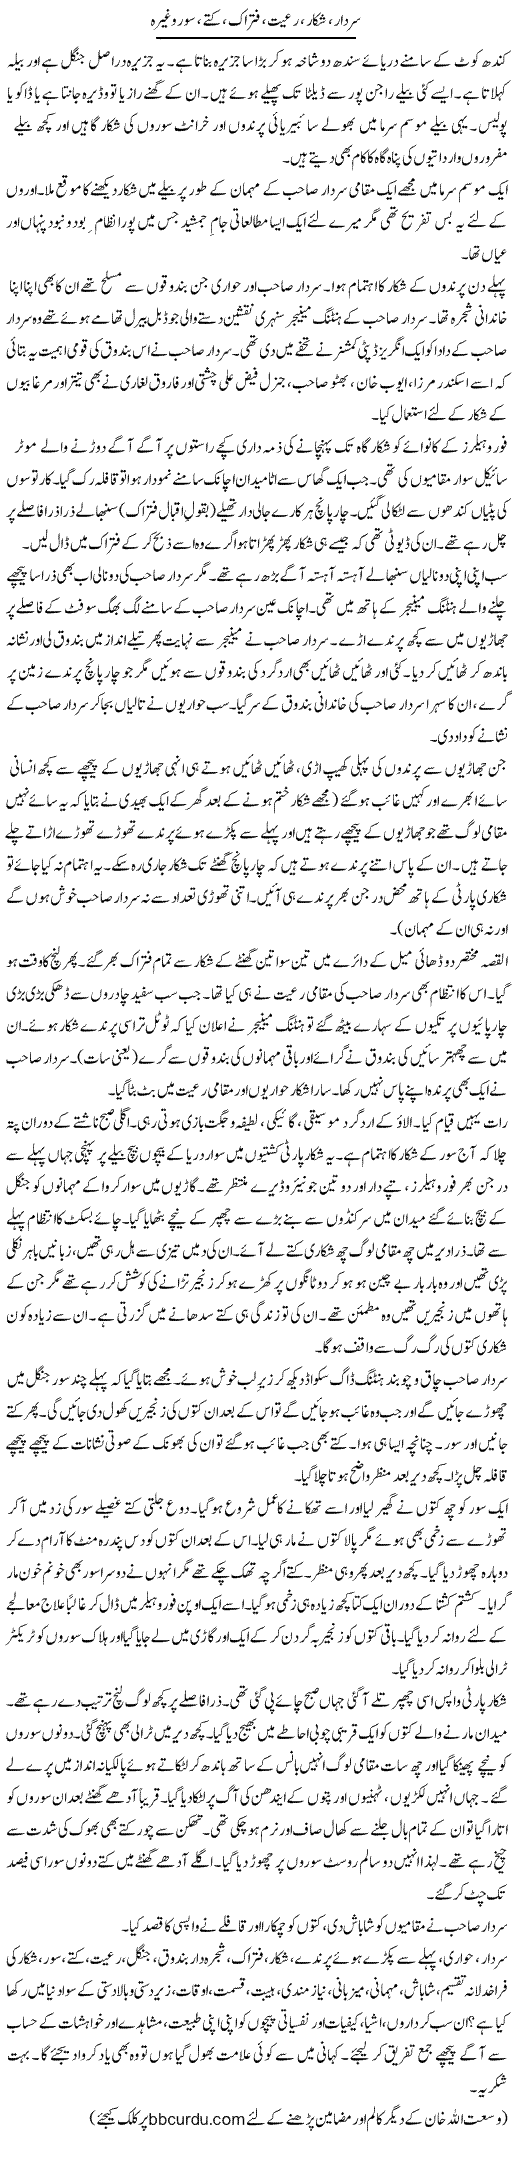 Sardar, Shikaar, Raiyat, Fitraak, Kuttay, Soor Waghera | Wusat Ullah Khan | Daily Urdu Columns